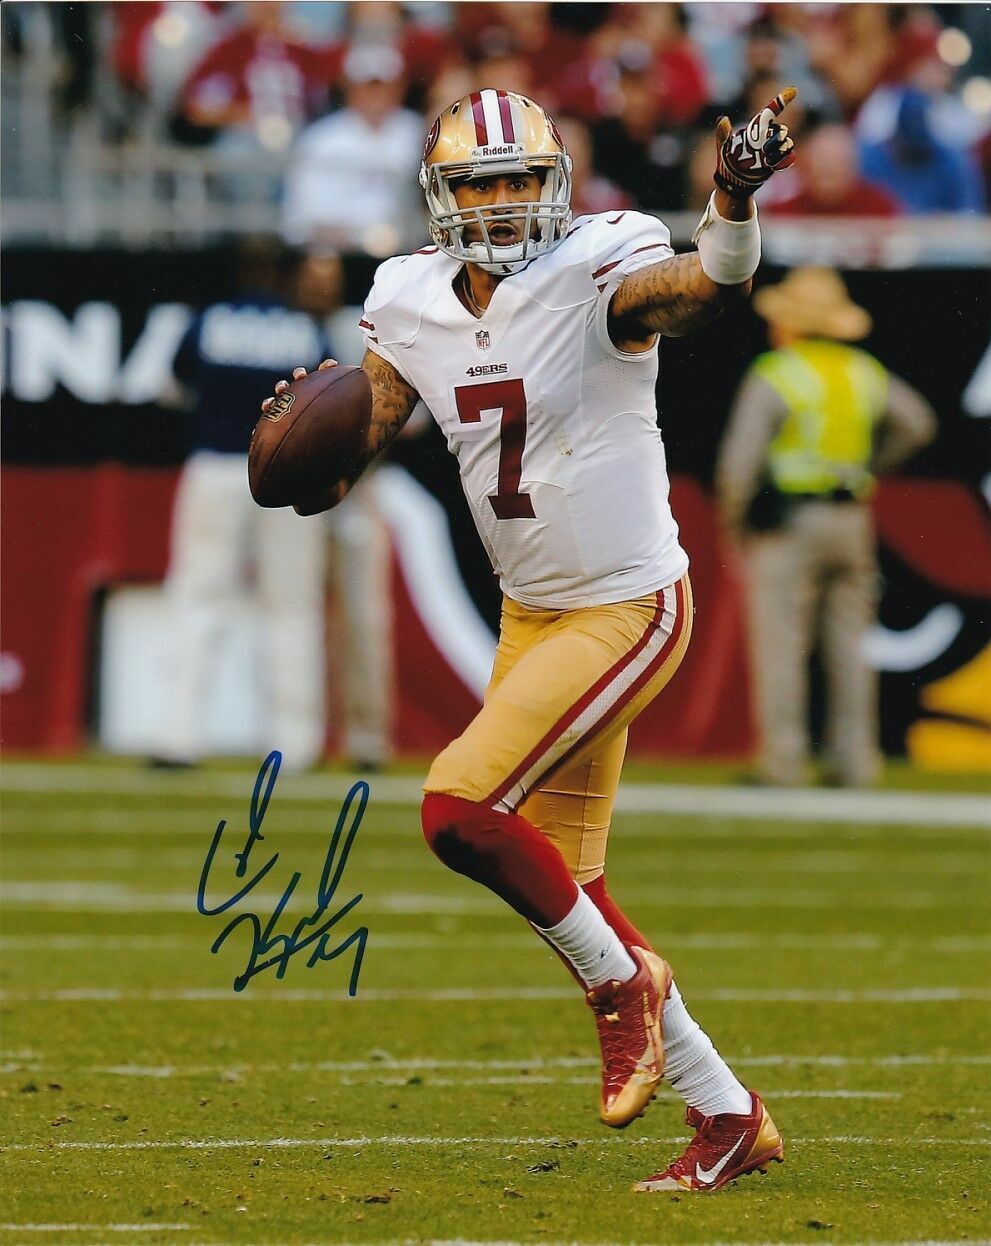 Colin Kaepernick Signed 8x10 Photo Poster painting Autograph (San Francisco NFL 49ers) REPRINT